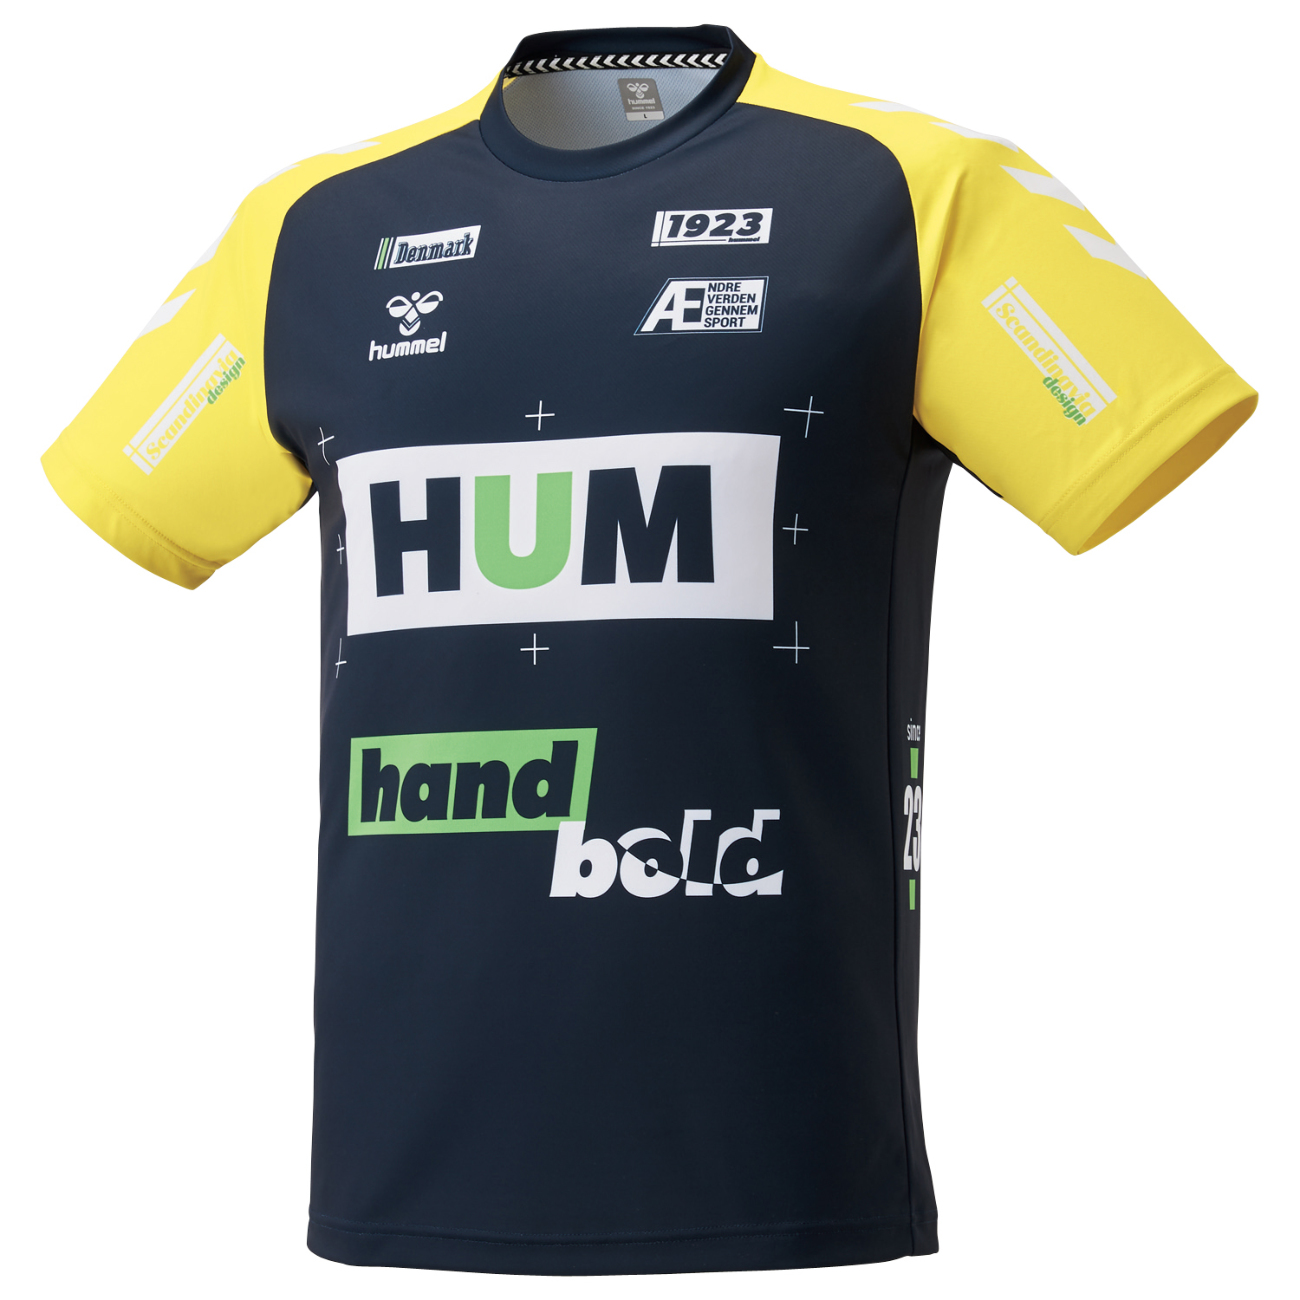 hummel(ヒュンメル)-S ハンドボール プラクティスシャツ ブラック